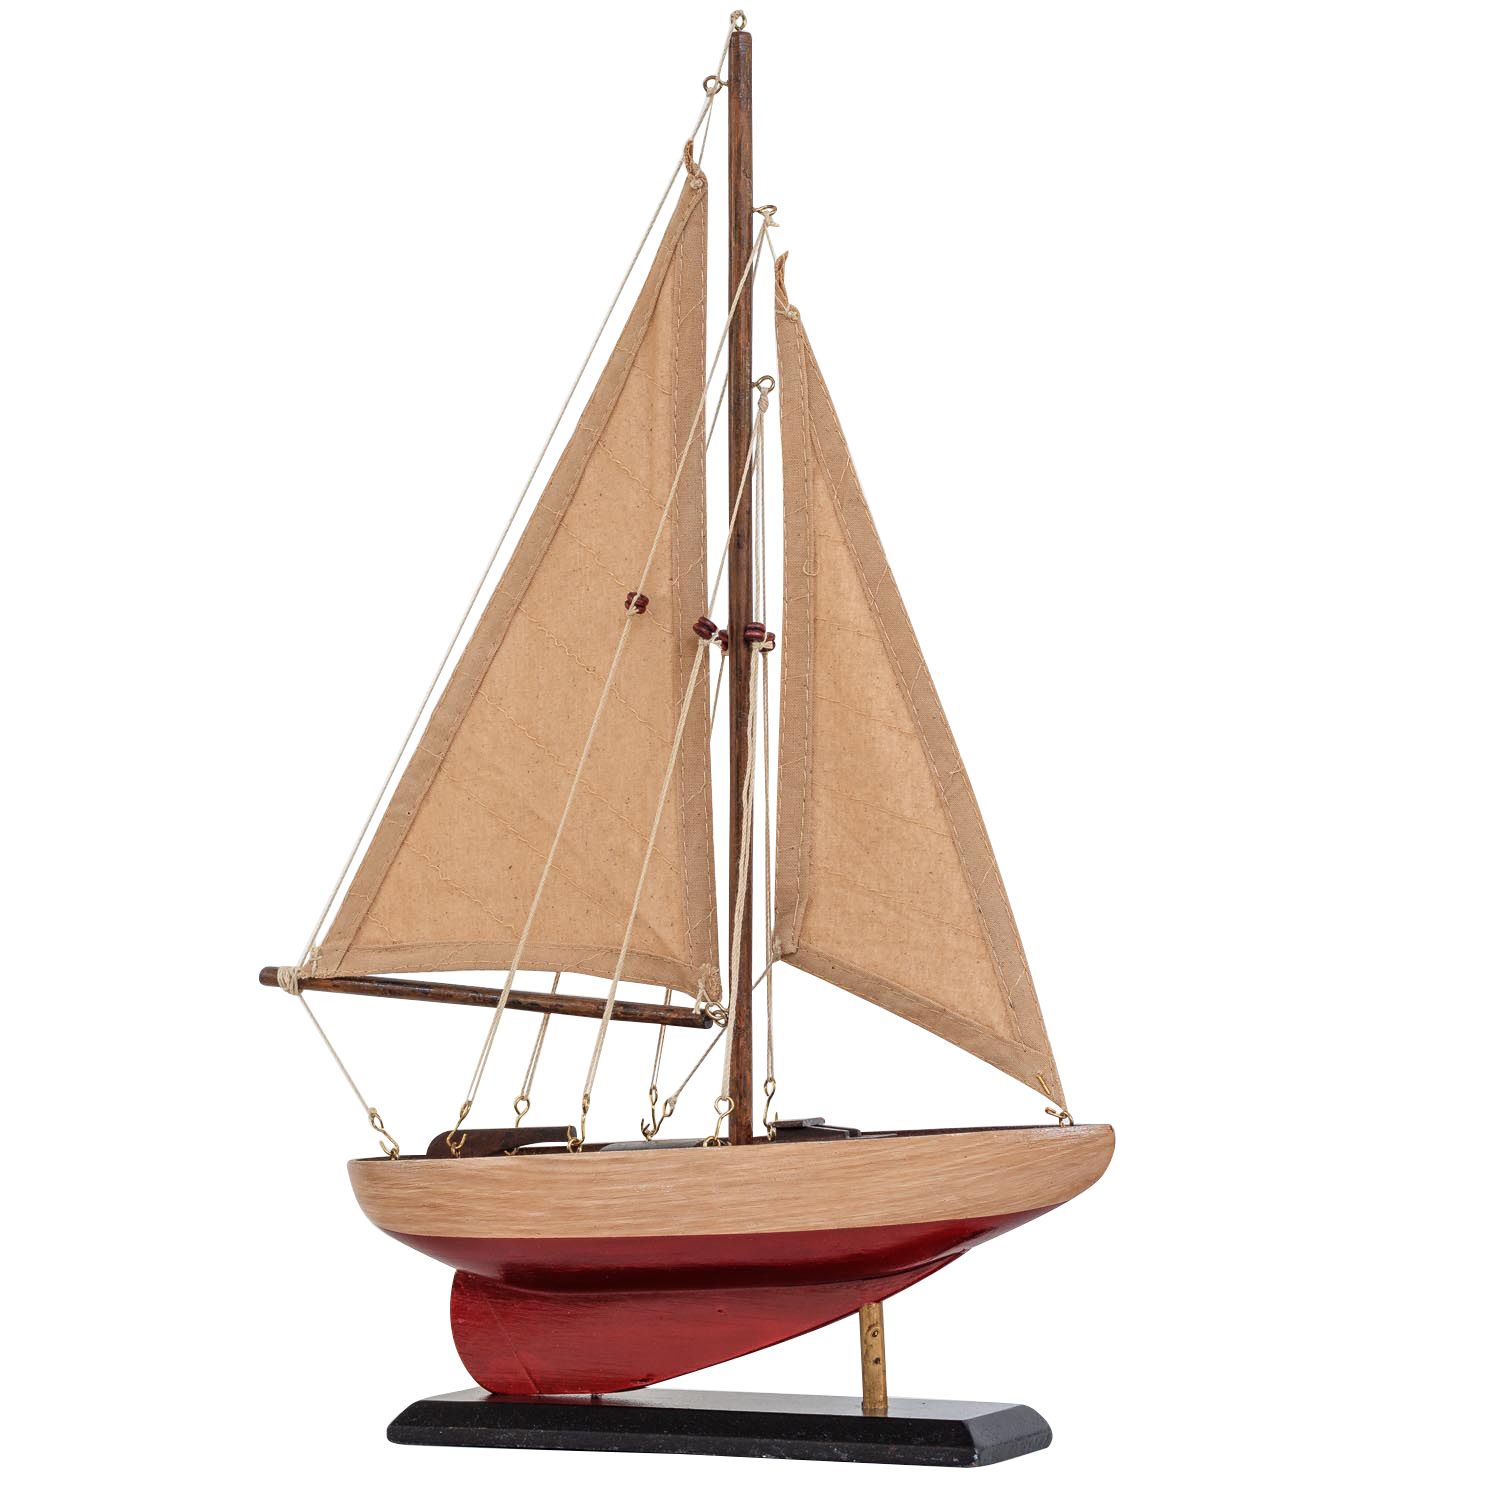 aubaho Modellschiff Atlantic Holz Schiffsmodell Schiff Segelschiff 48cm Antik-Stil